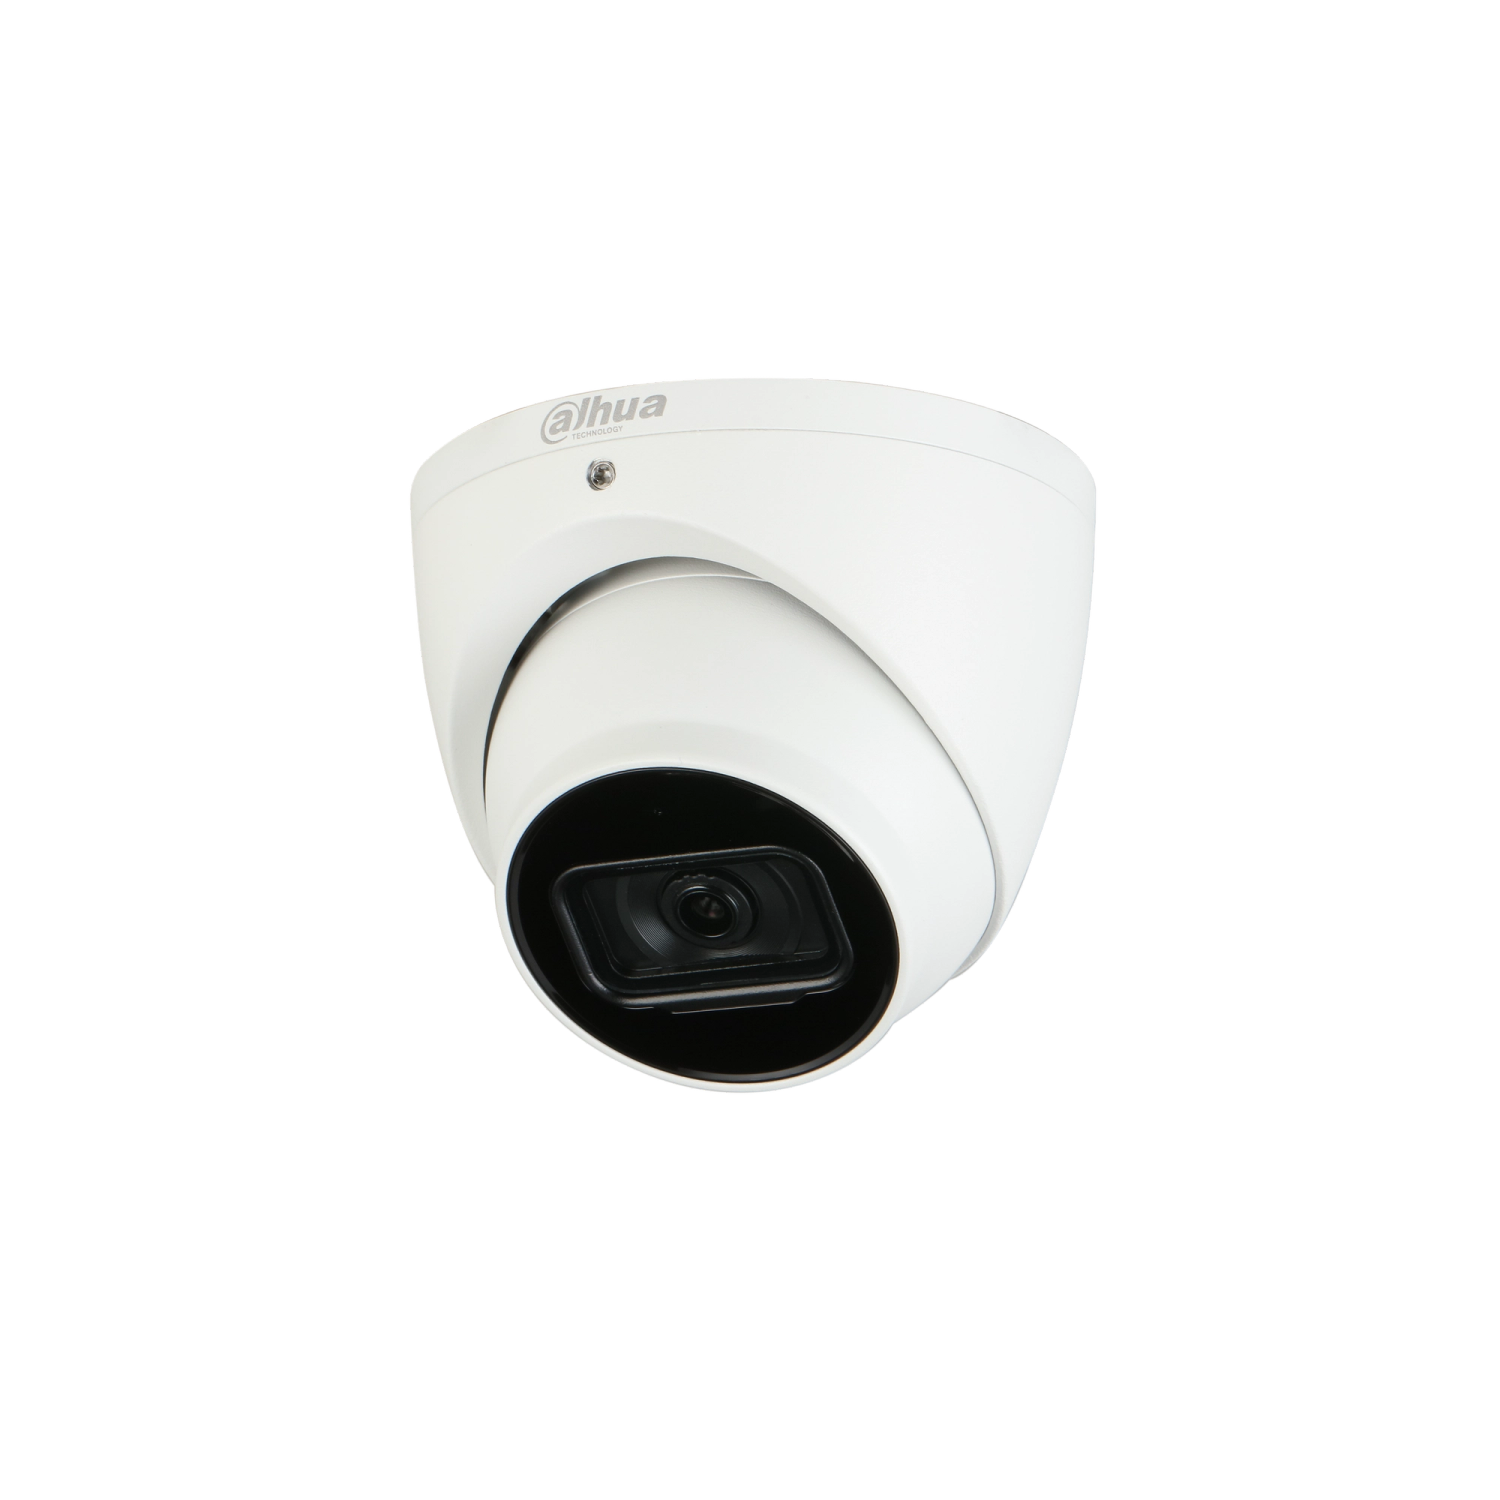 CCTV product